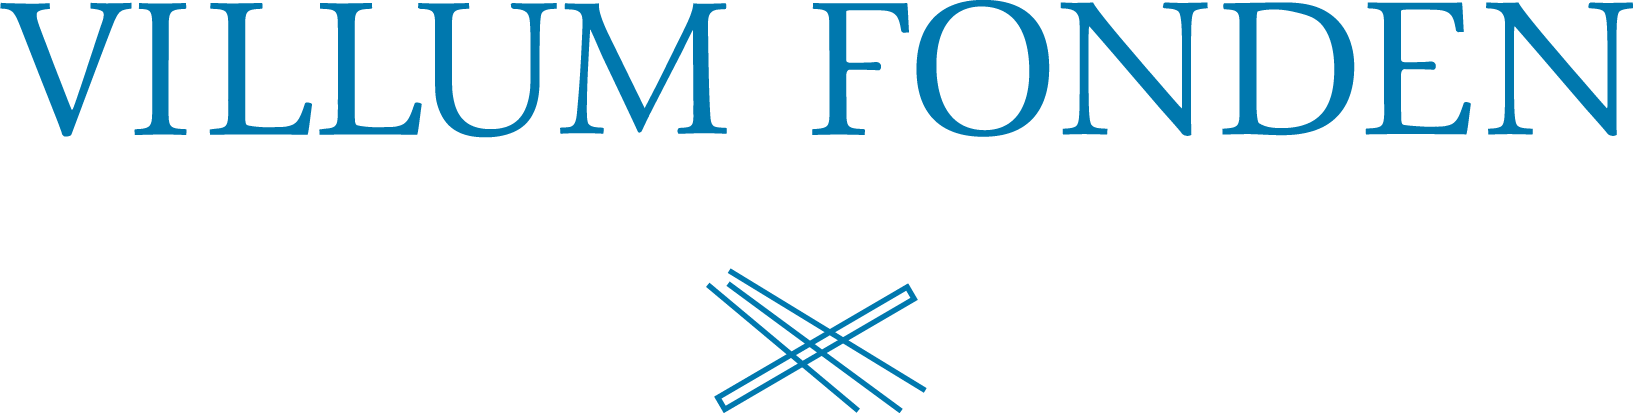 villum foundation logo